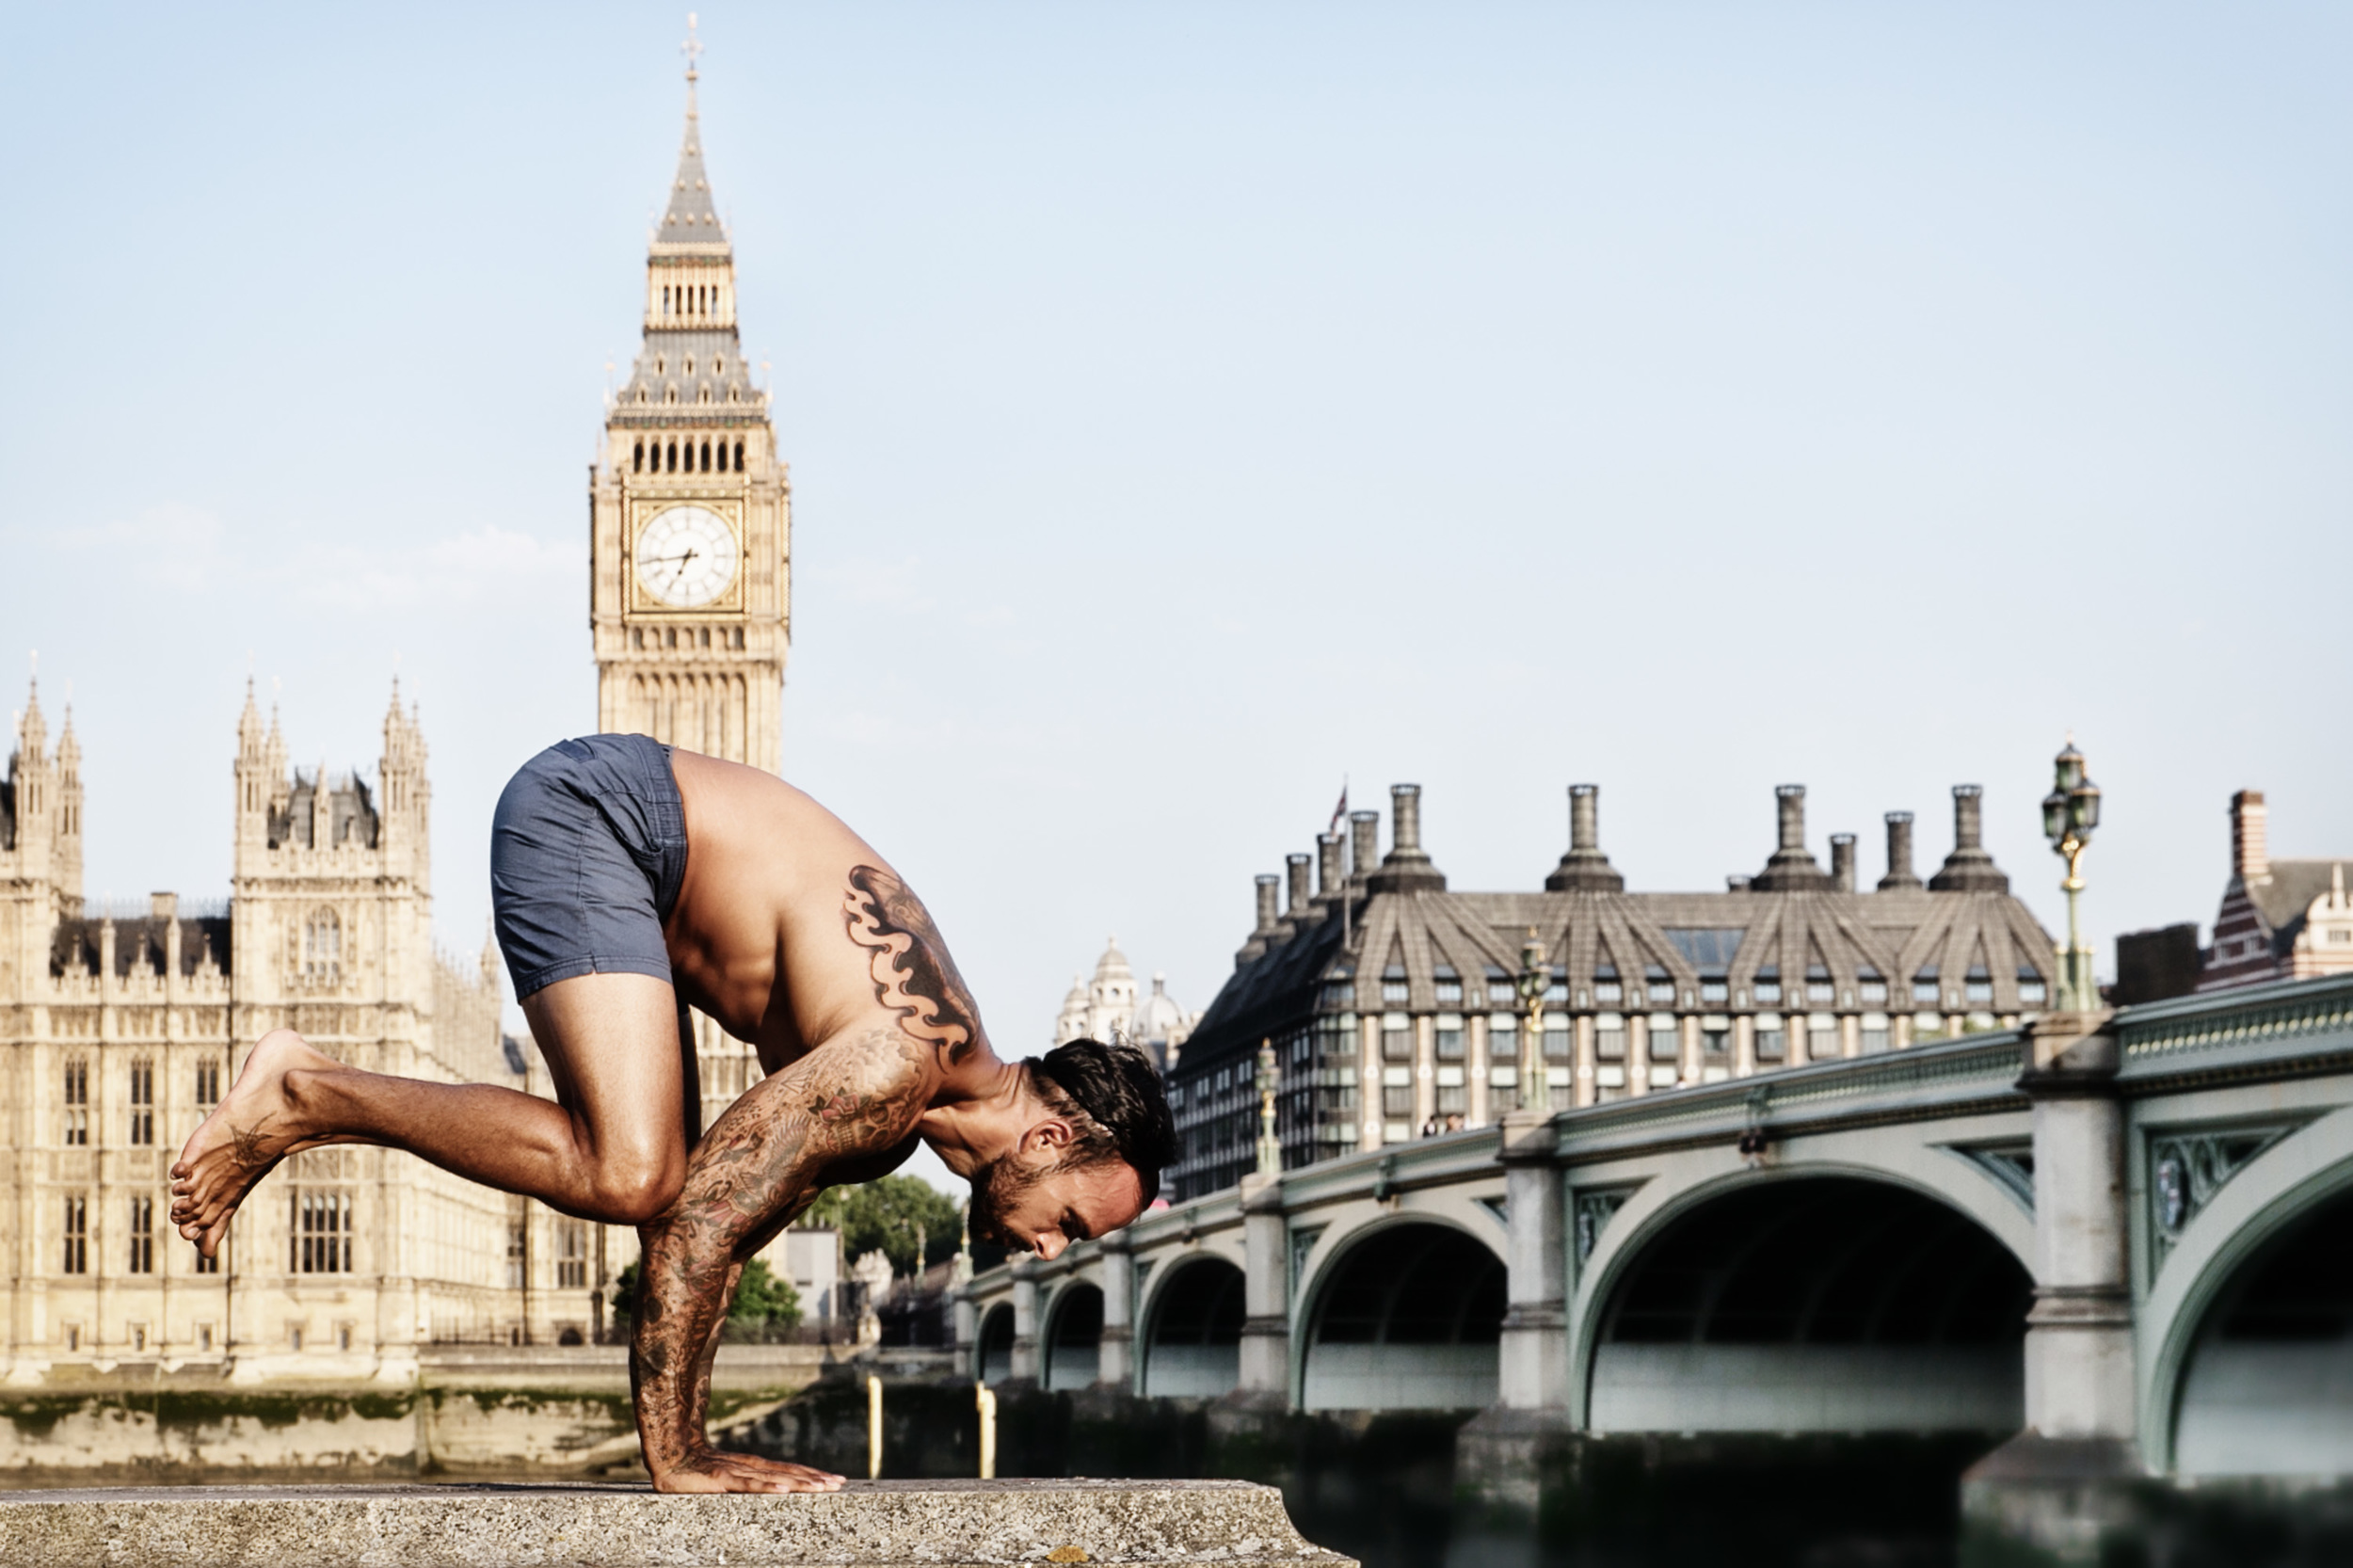 Публично: стриптиз и йога на улицах большого города